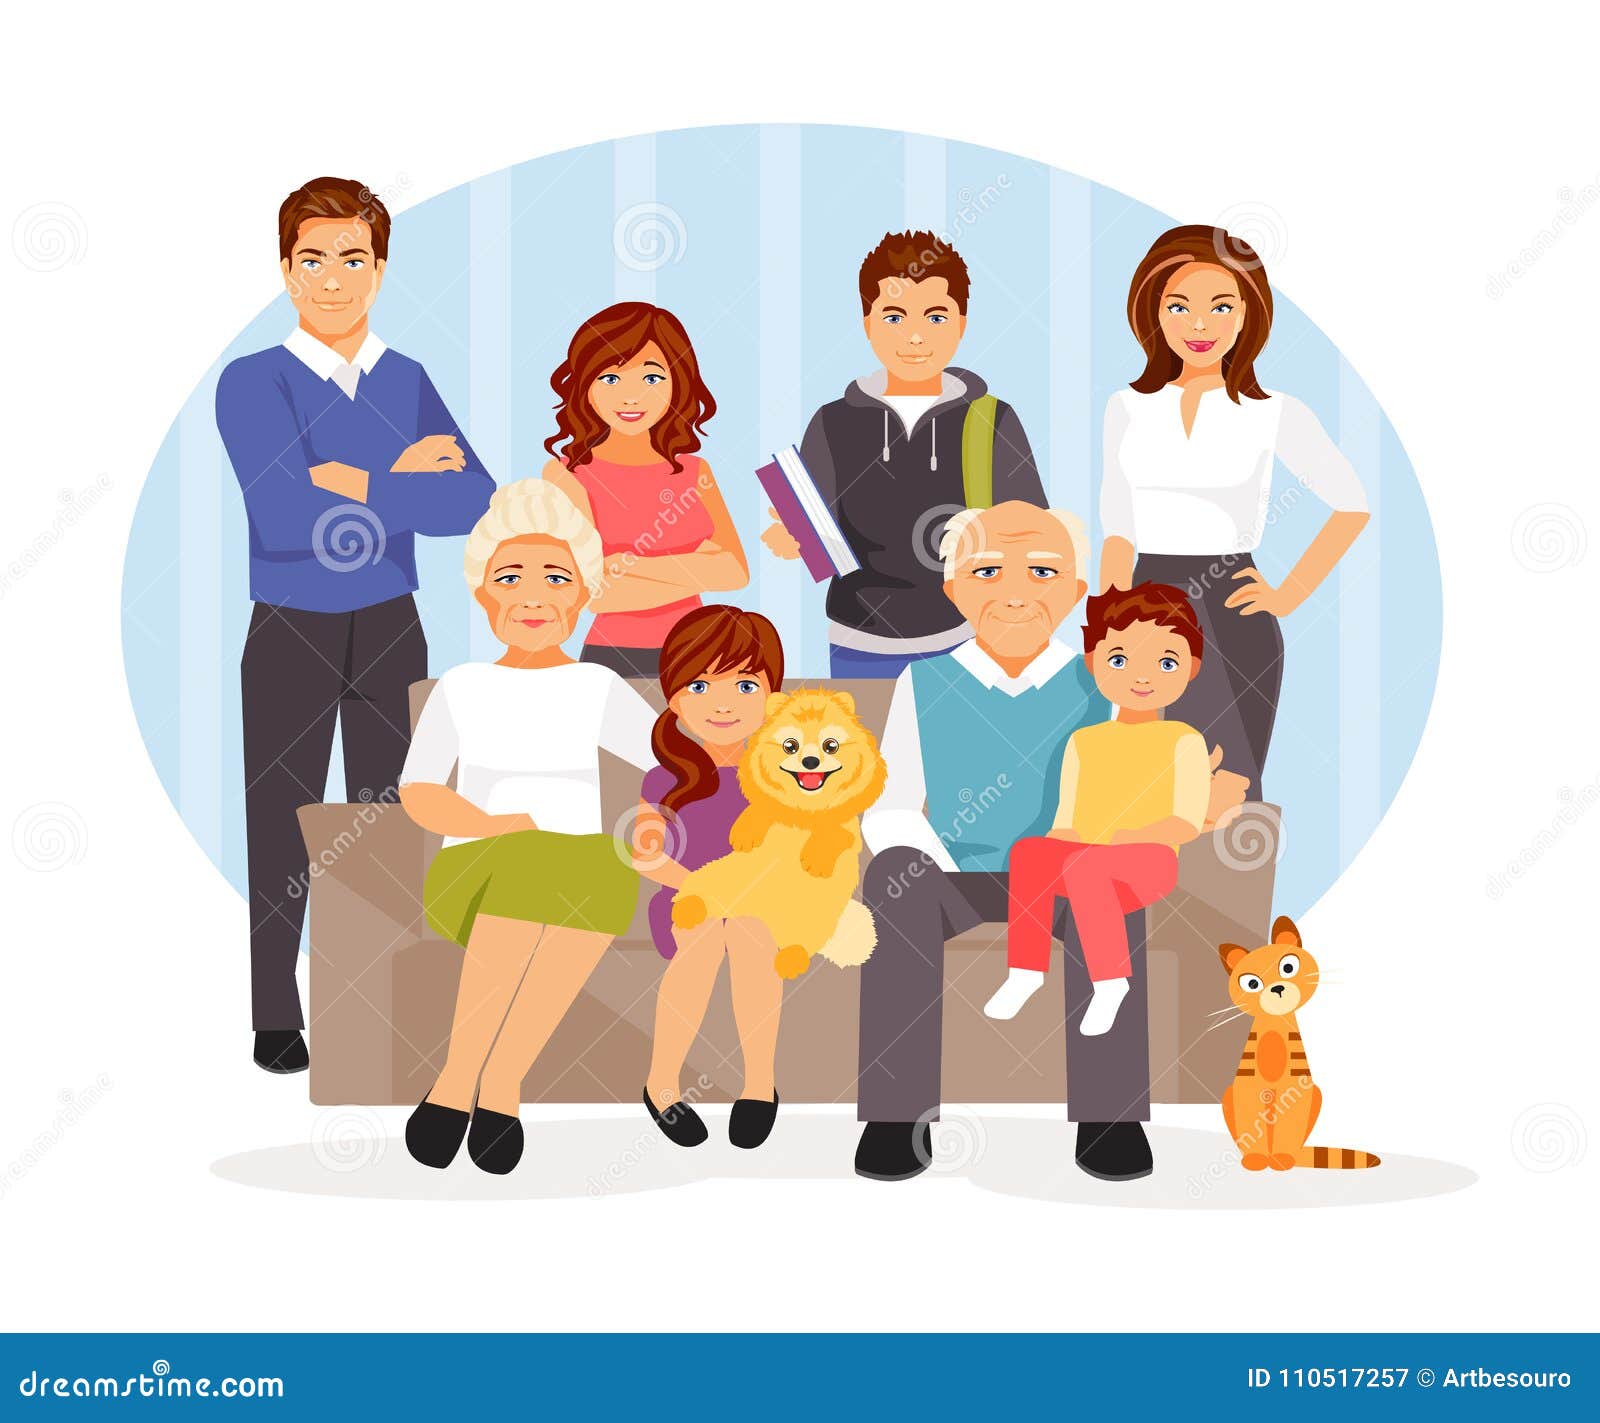 Cartoon big family stock vector. Illustration of grandparent - 110517257